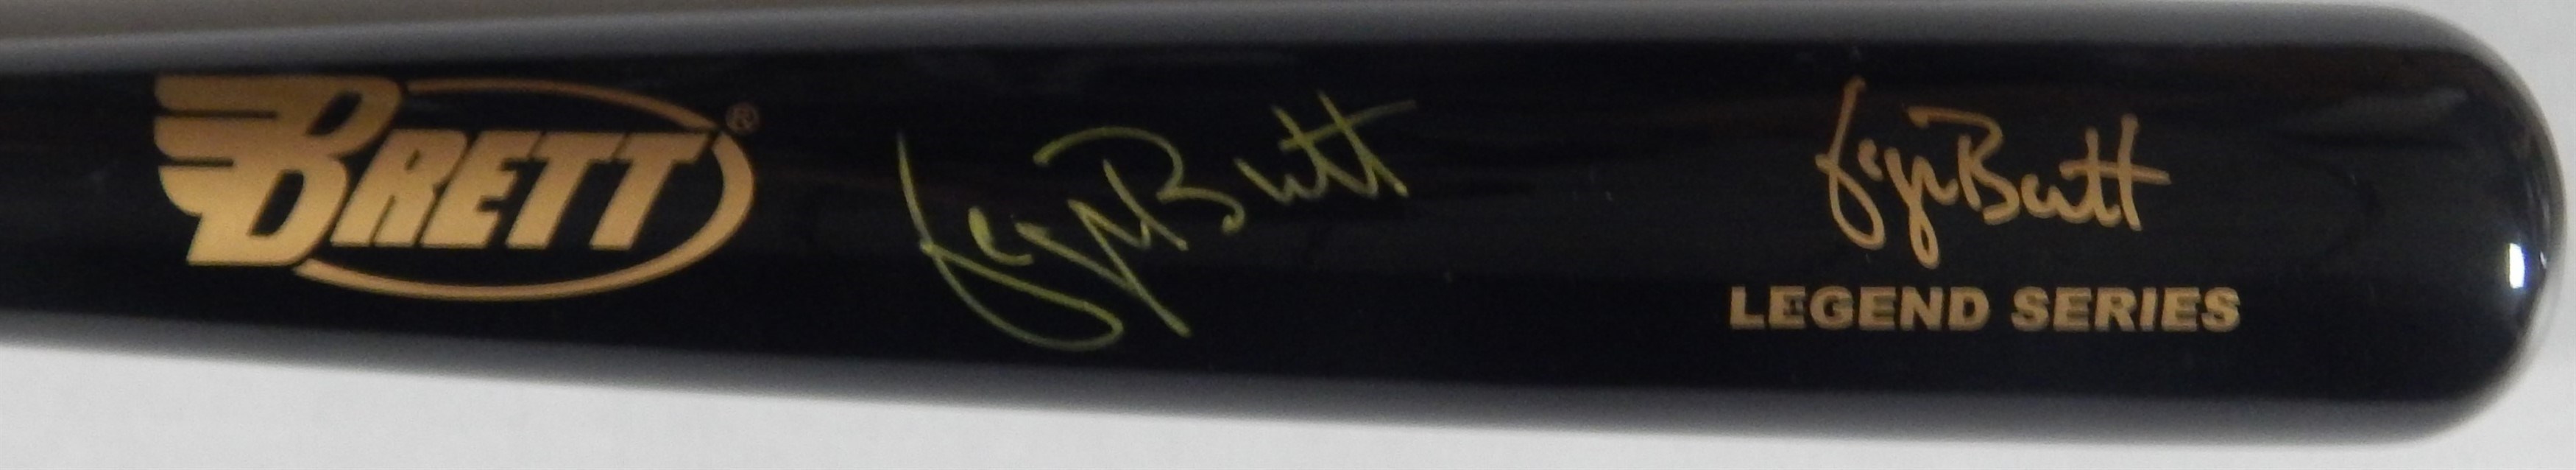 - George Brett Signed Bat